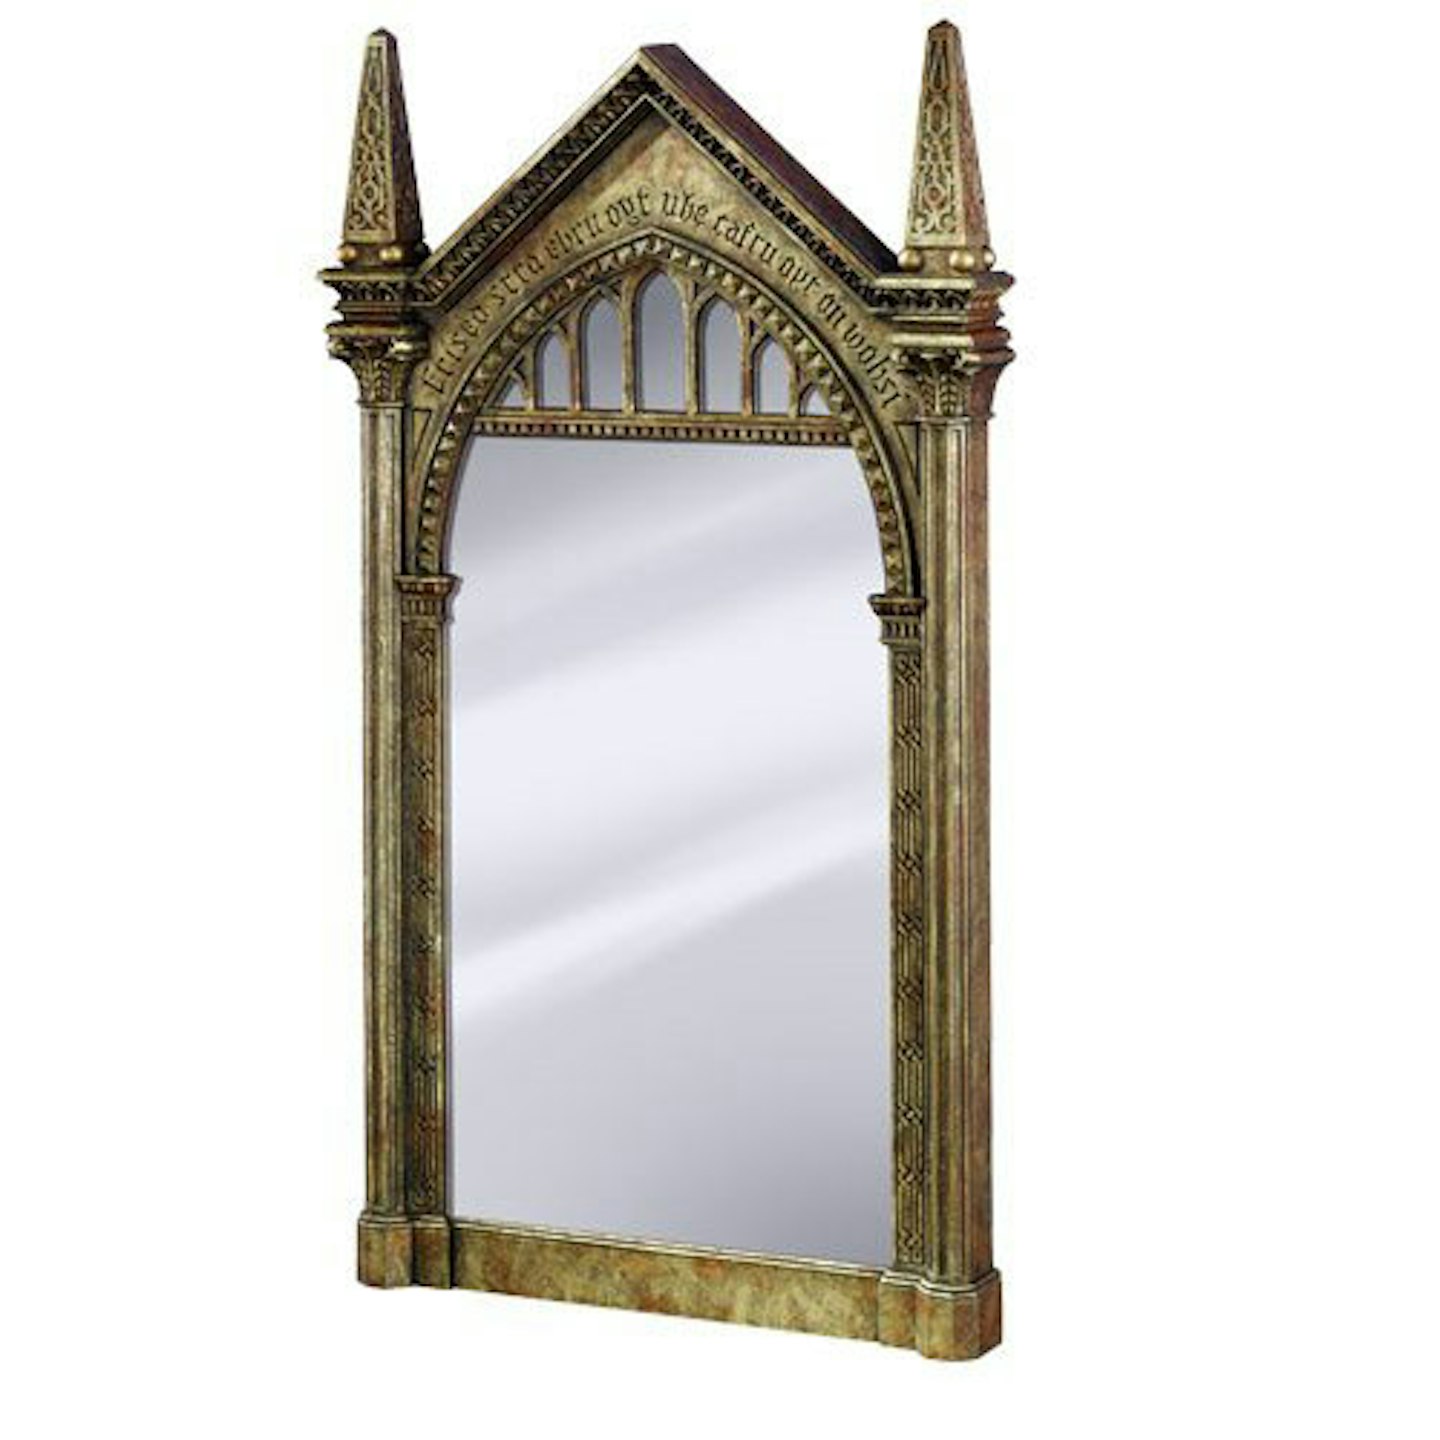 The Mirror of Erised, £63.70